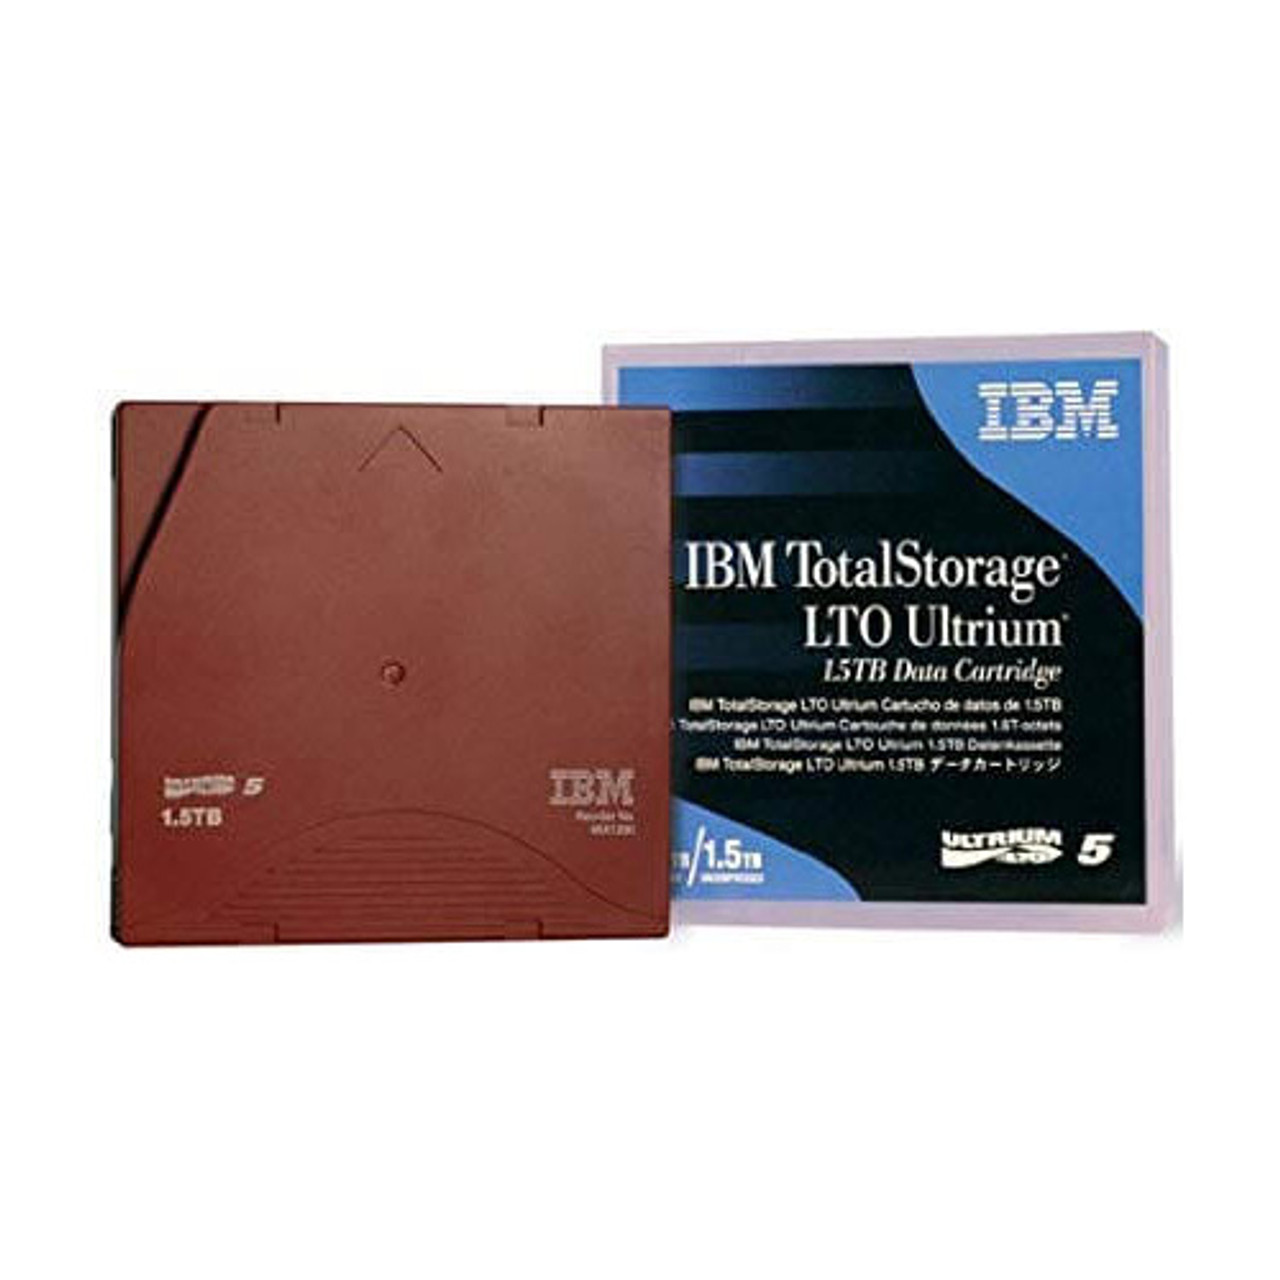 Genuine OEM brand name HP LTO5 Ultrium V 1.5TB/3.0TB C7975A